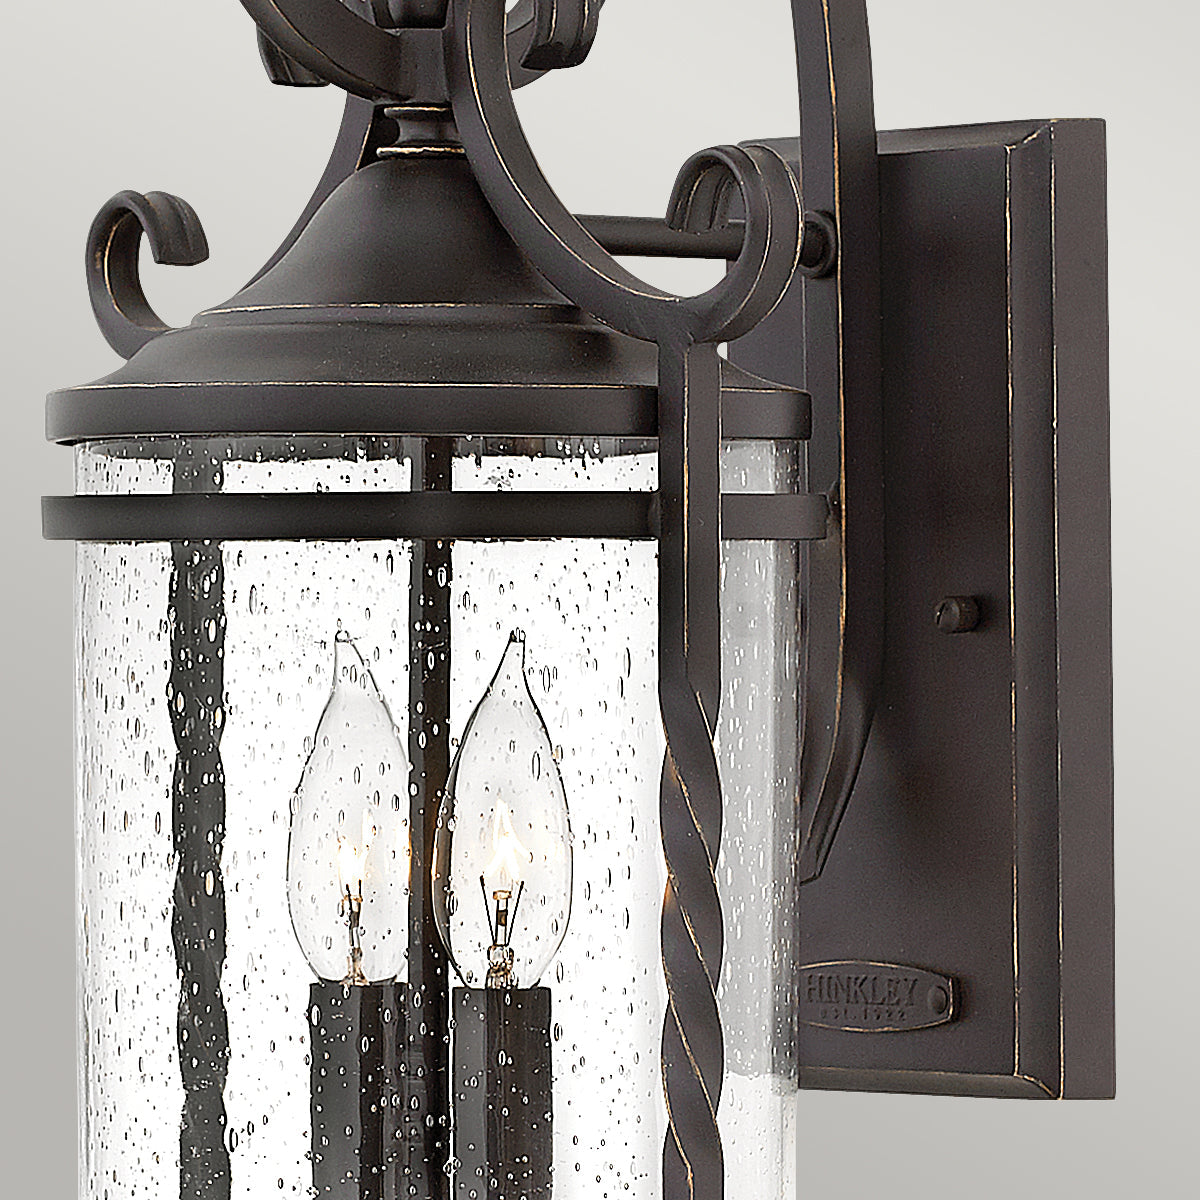 Casa Medium Wall Lantern – Olde Black Finish